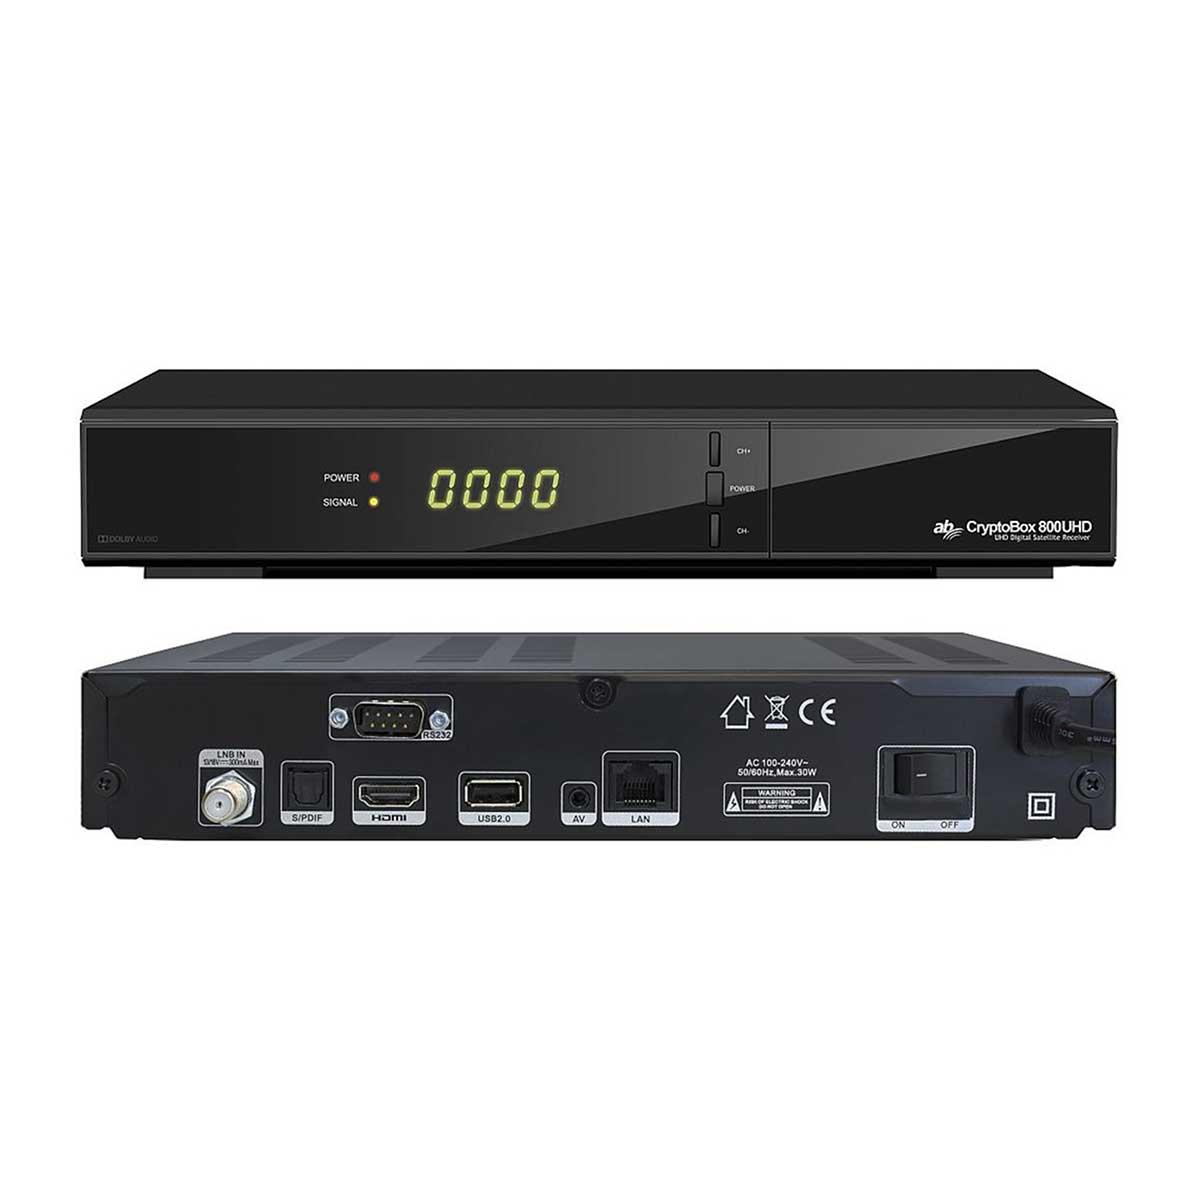 schwarz) Sat-Receiver (HDTV, PVR-Funktion=optional, CryptoBox AB-COM 800UHD